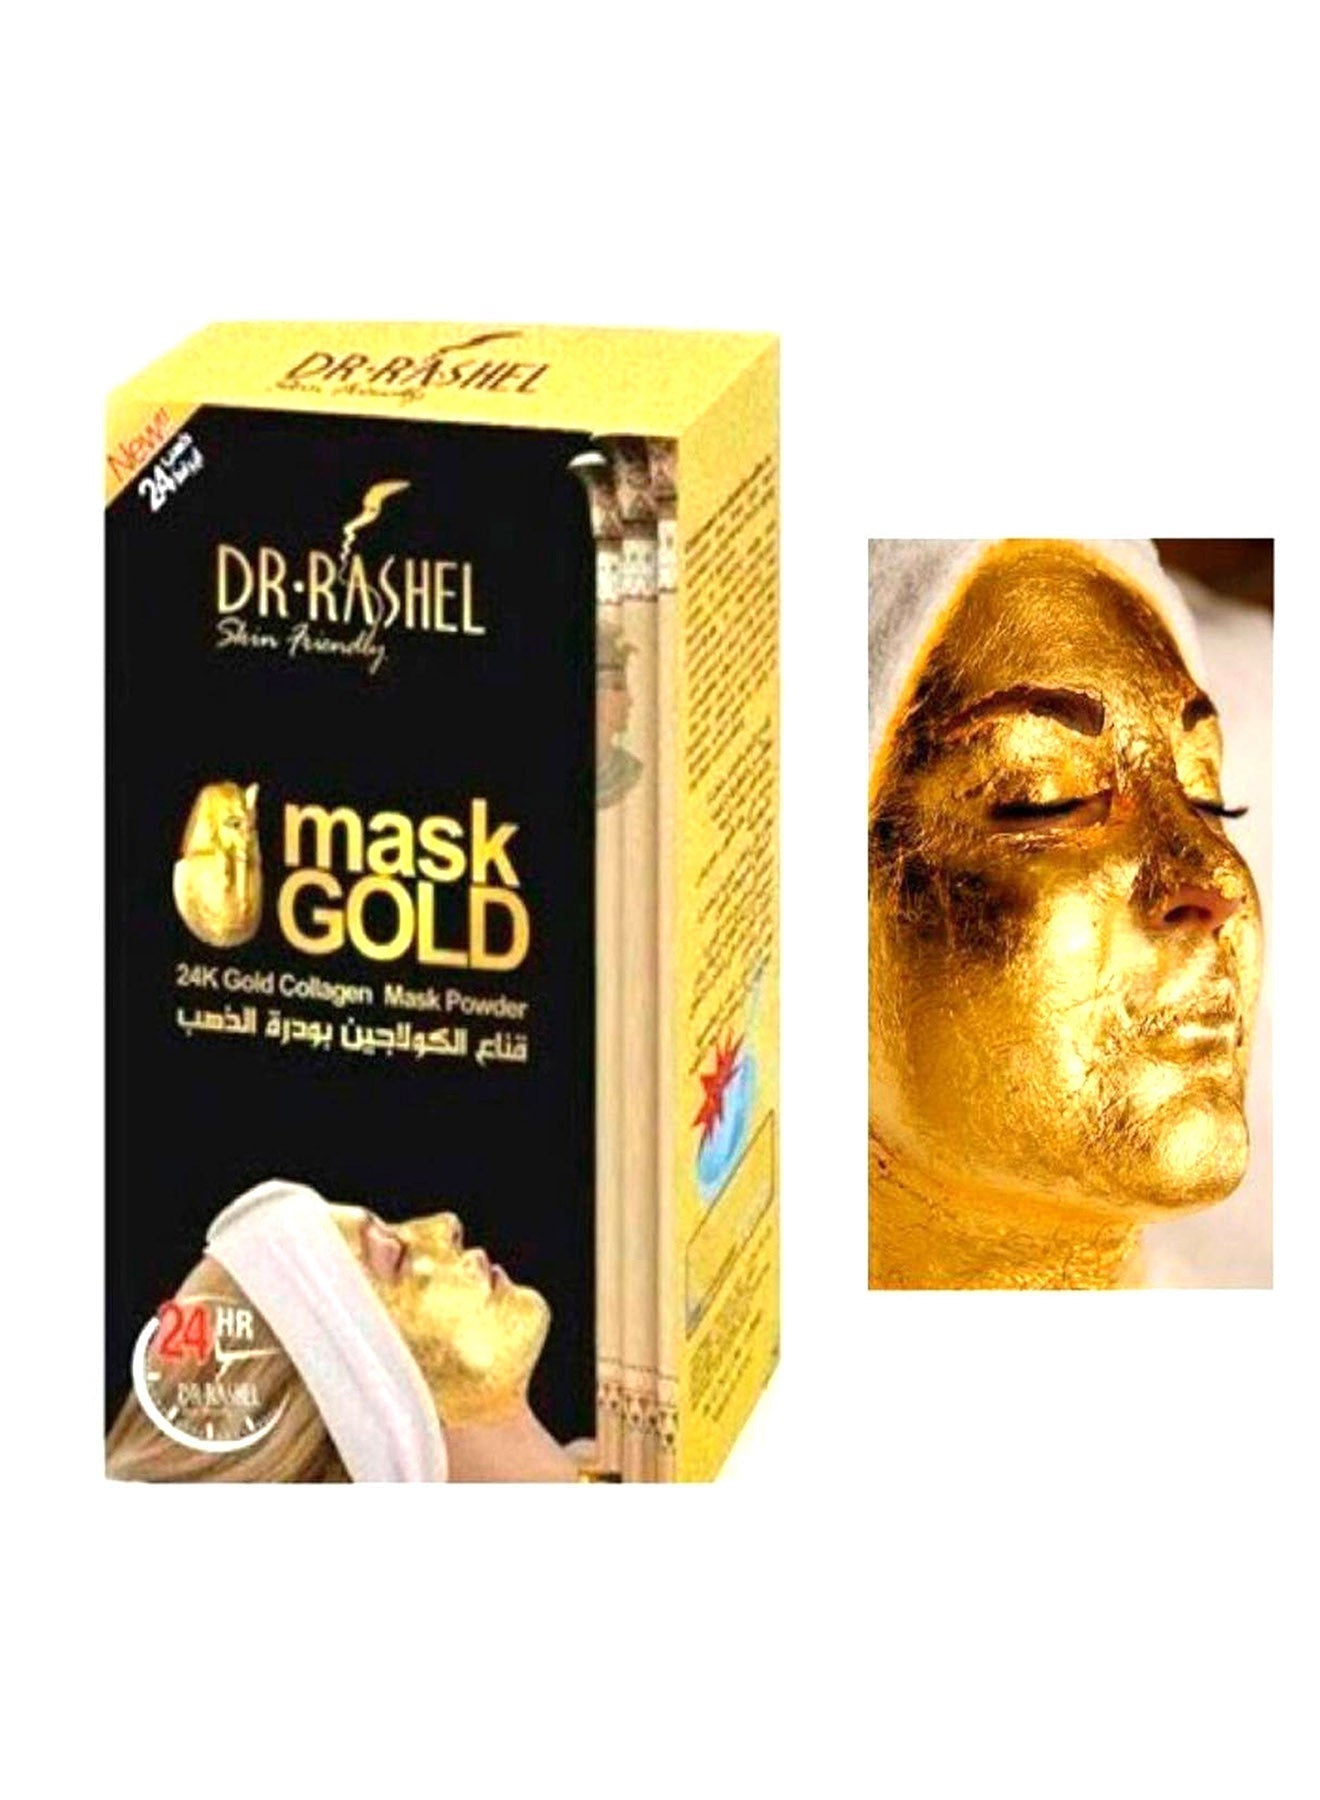 Dr Rashel 24k Gold Collagen Mask powder 300g Value Pack of 2 